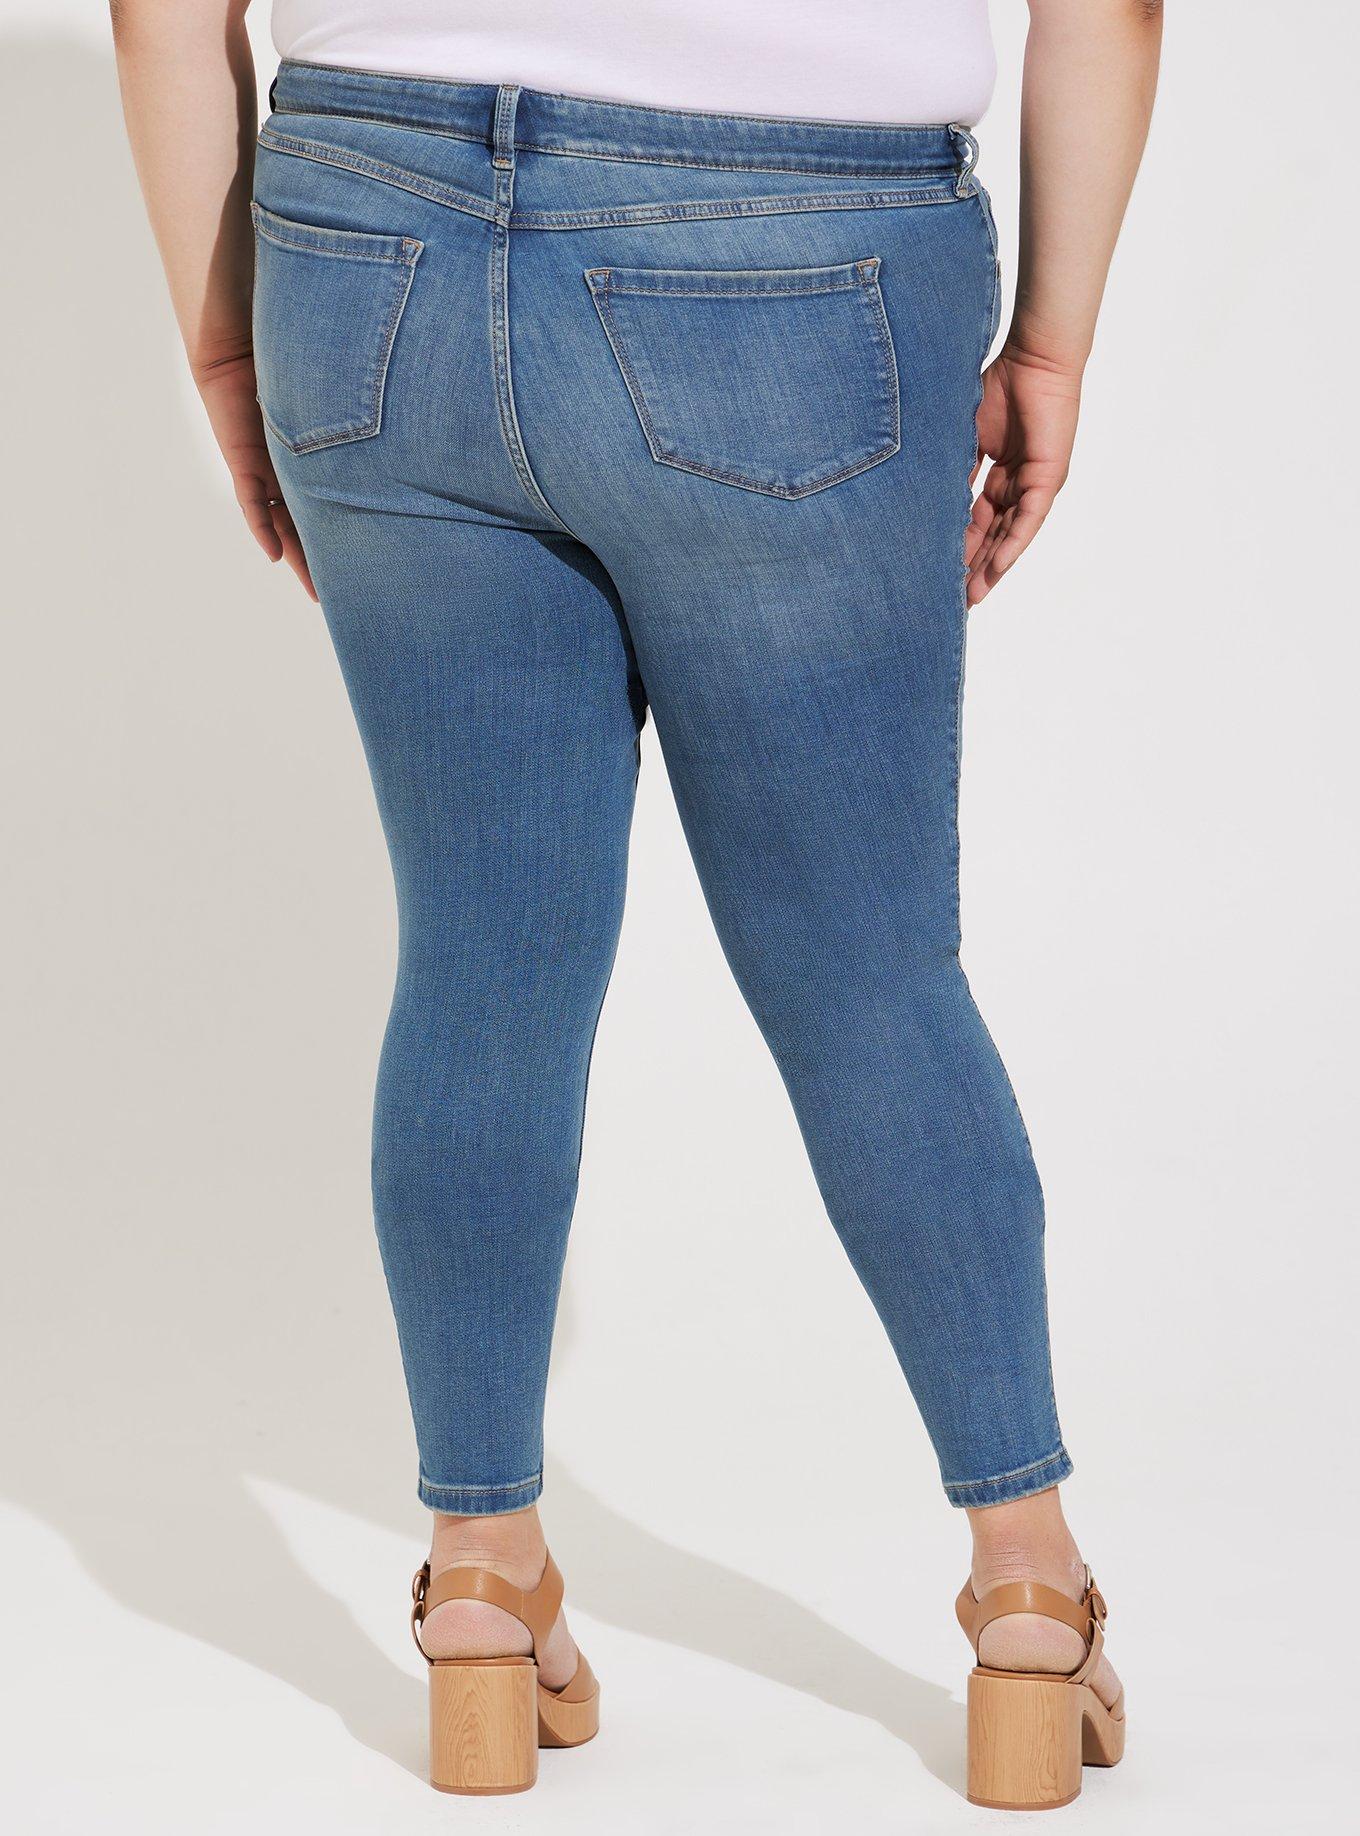 2021❣﹍Melody Female Sexy Jeans Pants Compression Pants Women